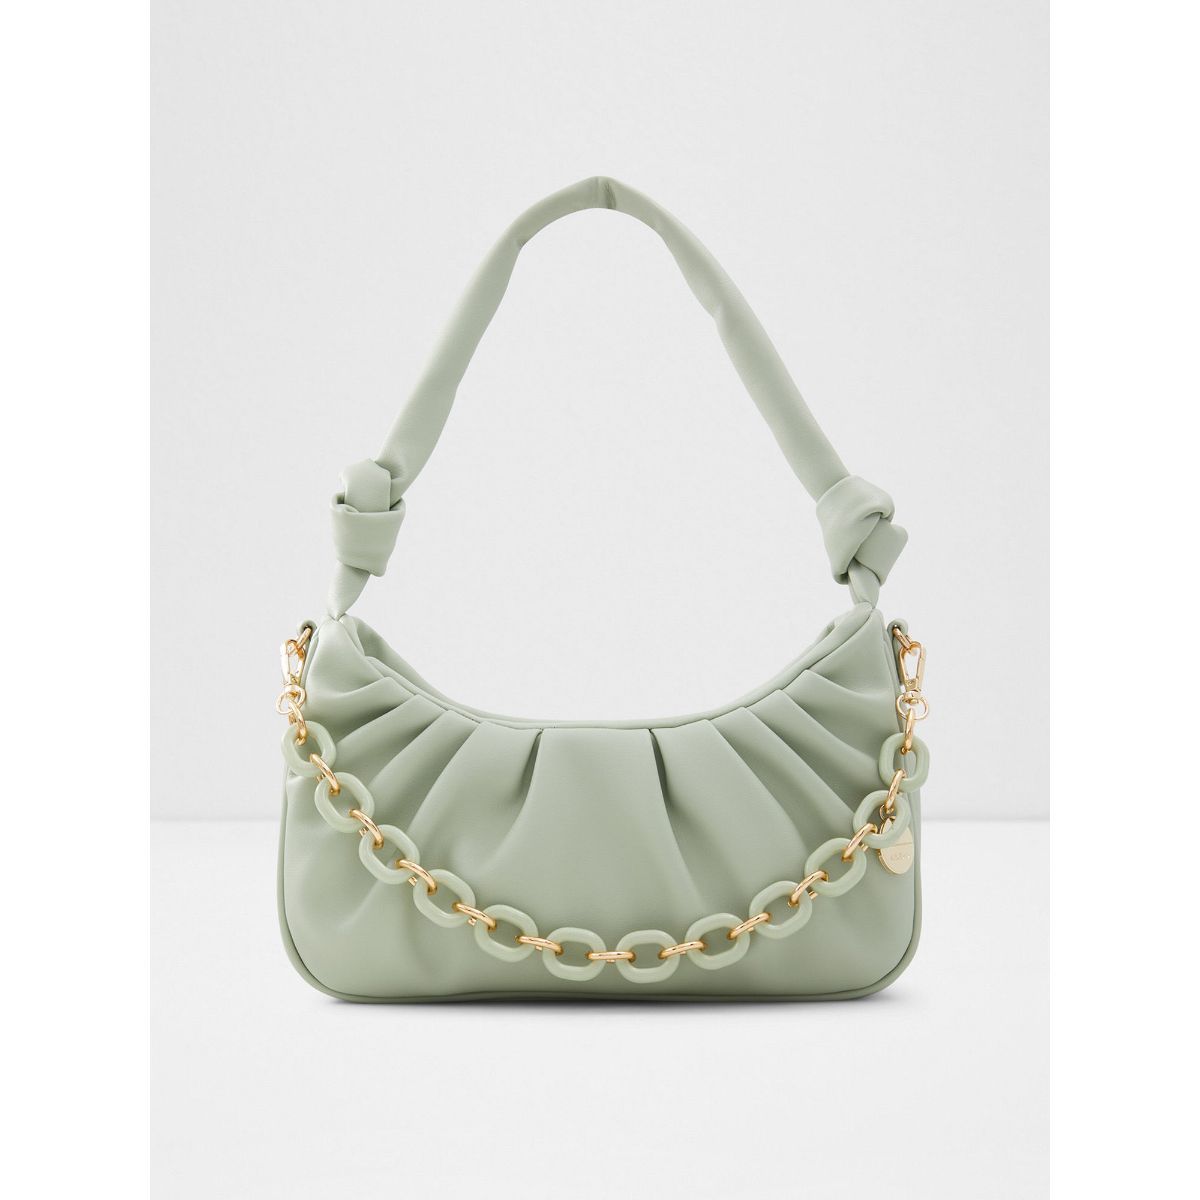 Aldo Handbags : Buy Aldo Amalya330 Green Handbags Online